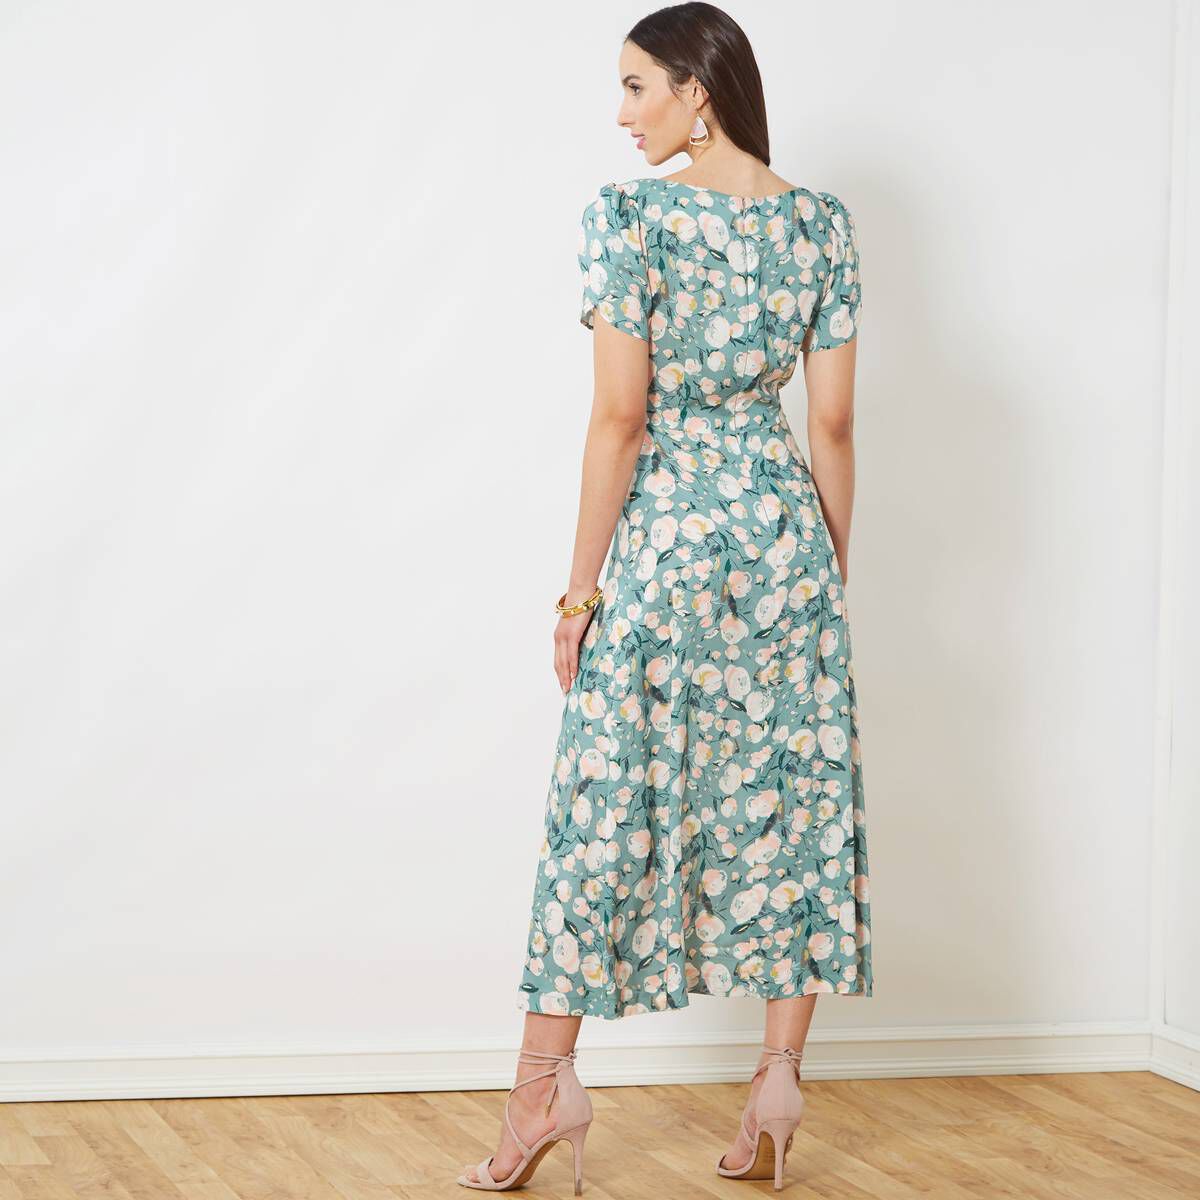 New Look Women’s Dress Sewing Pattern N6693 | Hobbycraft